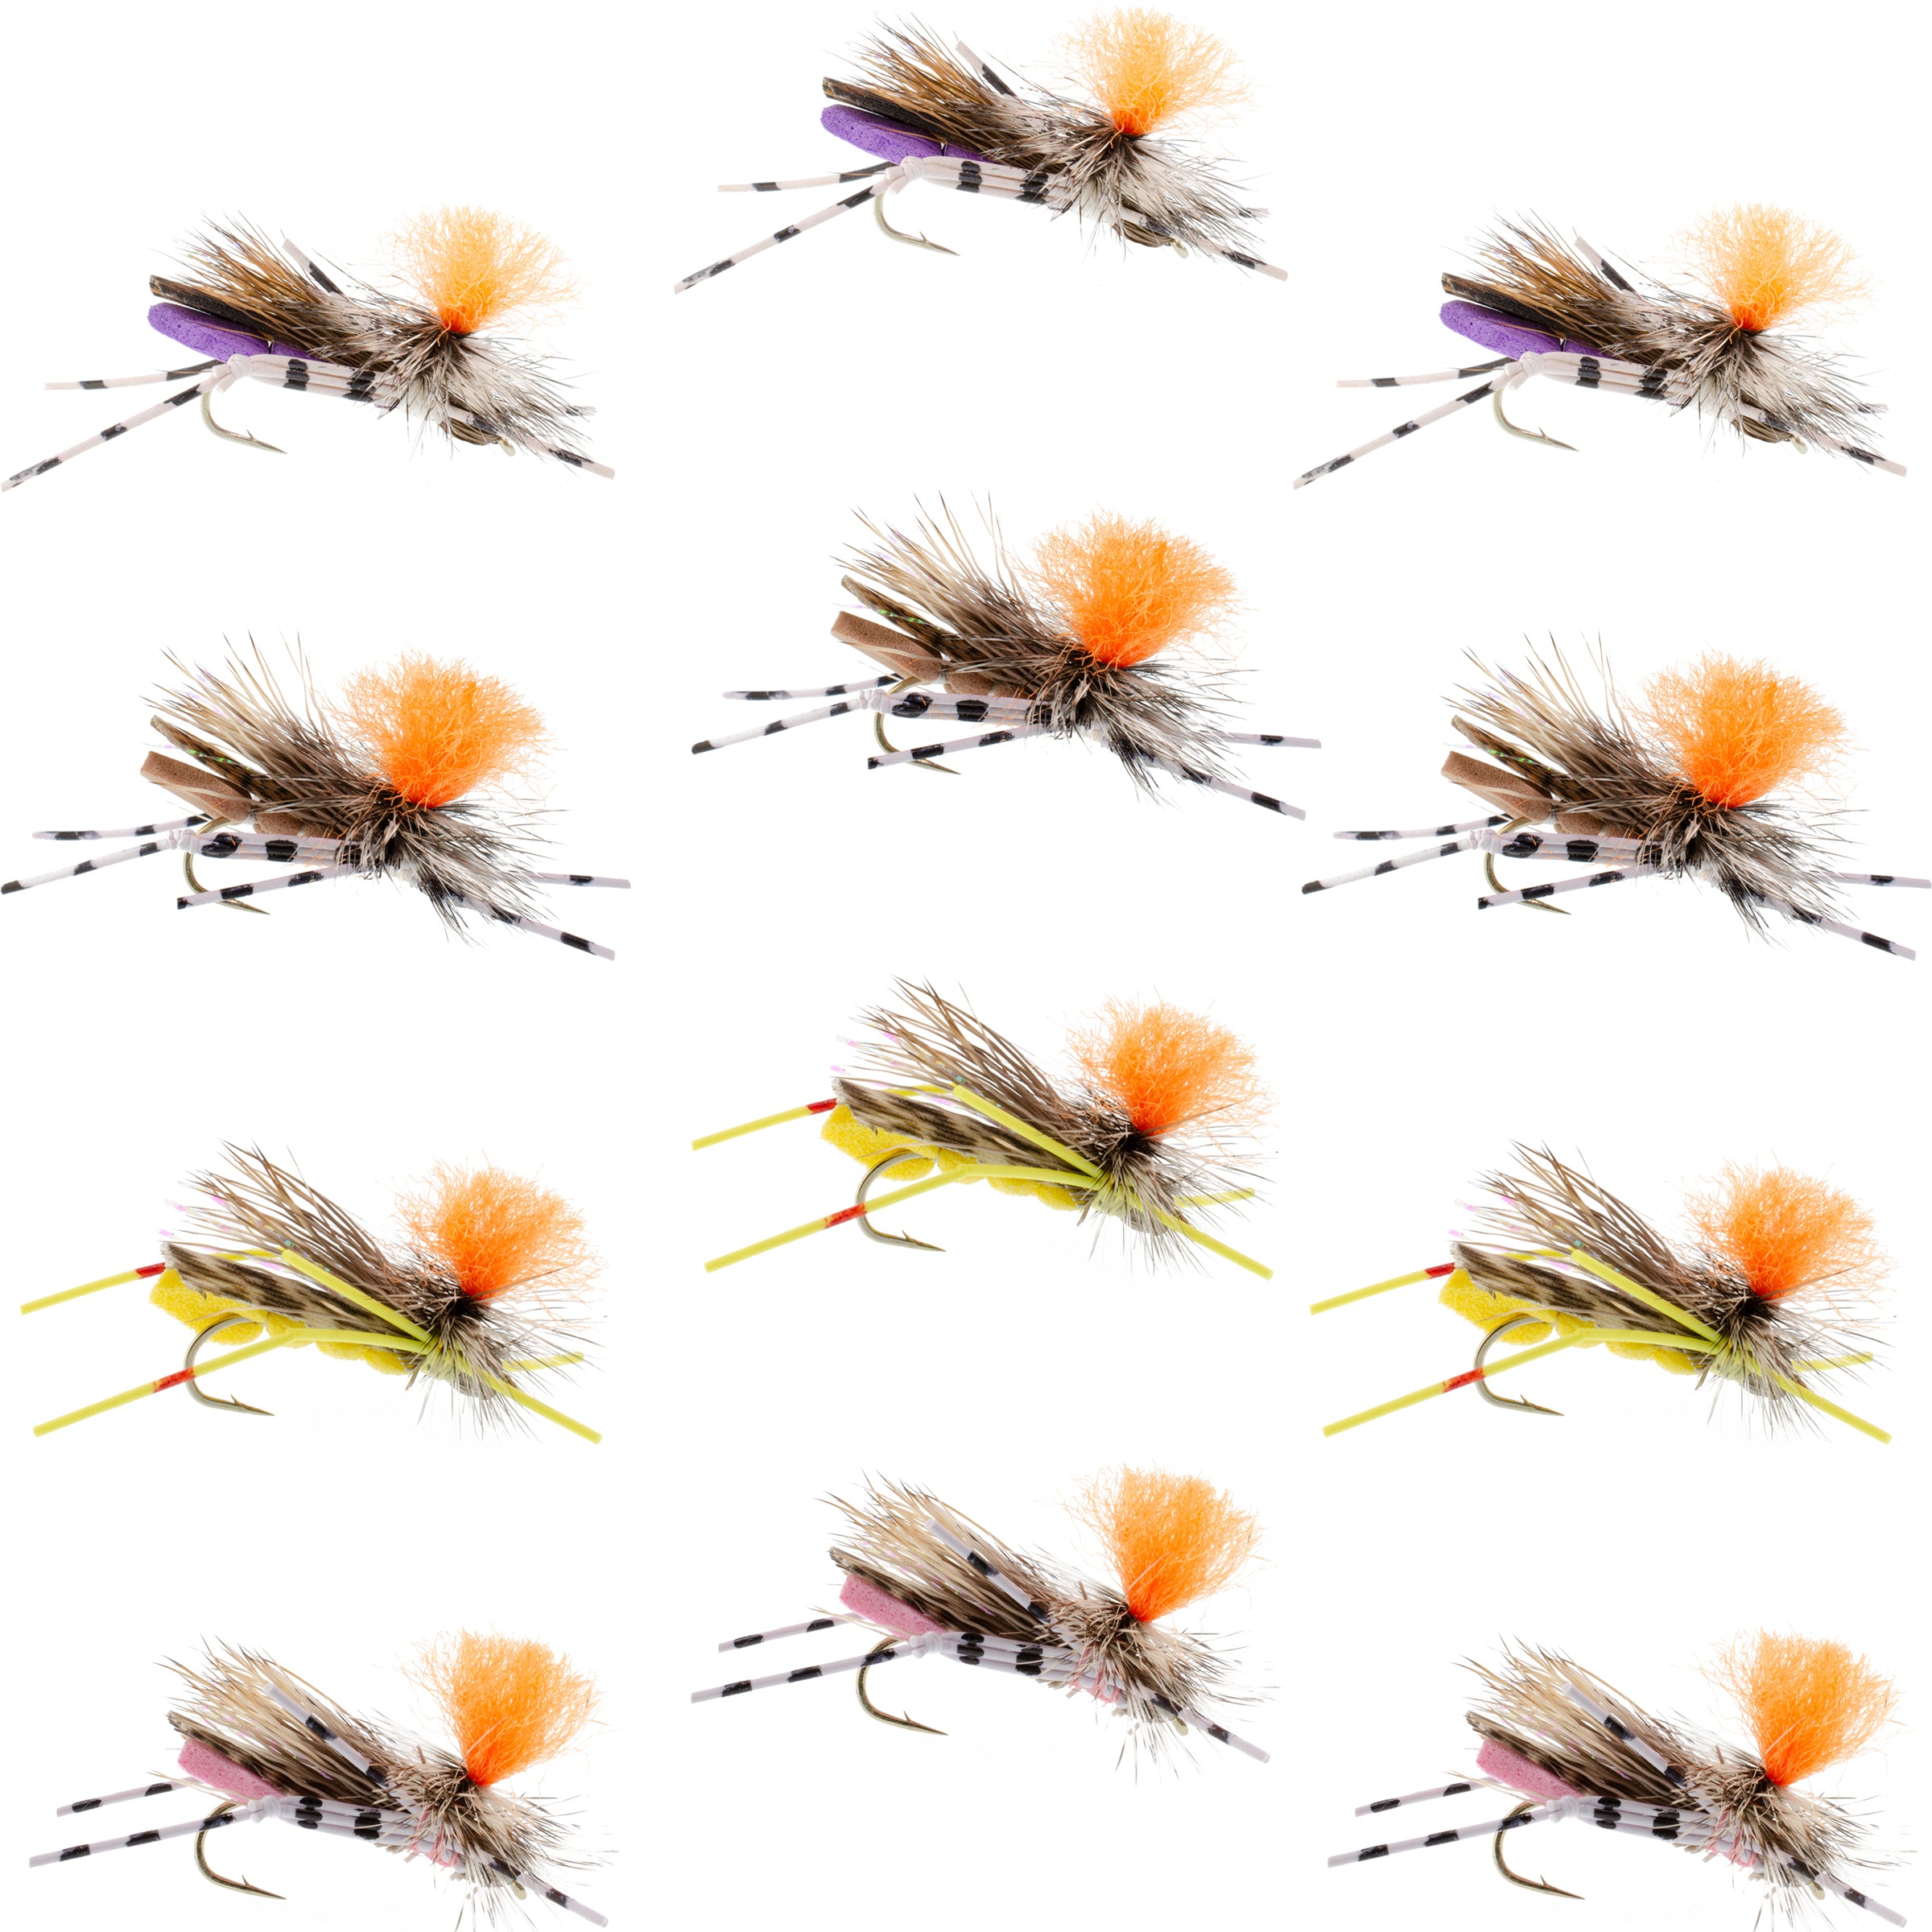 Trout Fly Assortment - High Visibility Feth Grasshopper Dry Fly Collection 1 Dozen Flies - Foam Body Hopper Flies - Size 10